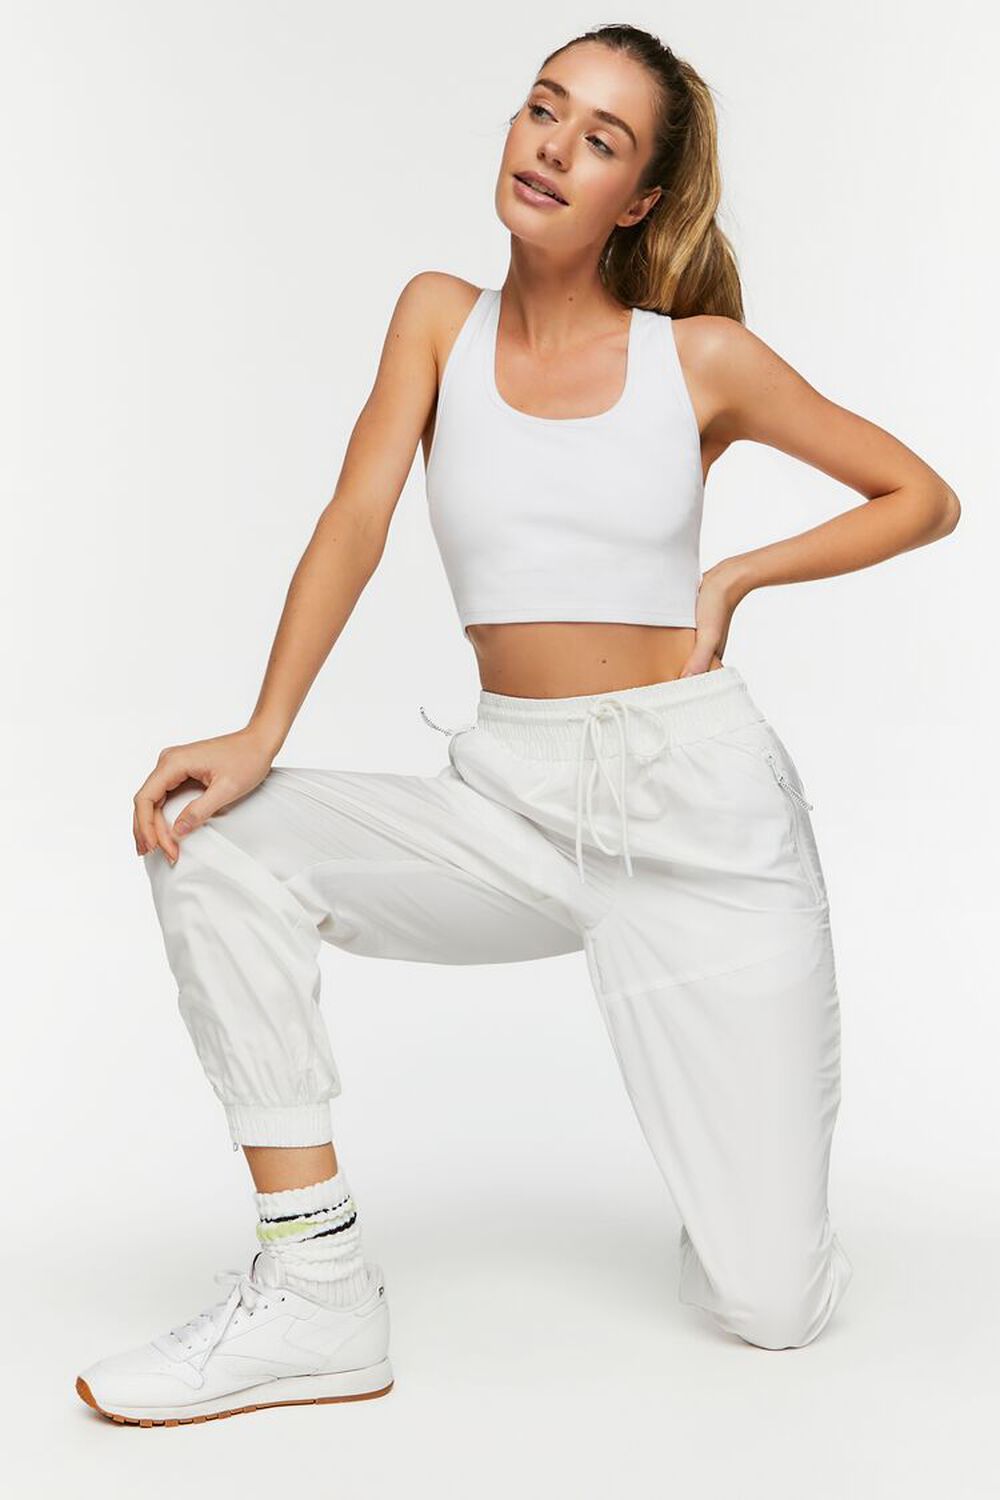 RIMLESS 7 Capri Pants for Women High Waisted Capri Leggings with Pockets  Workout Yoga Pants White